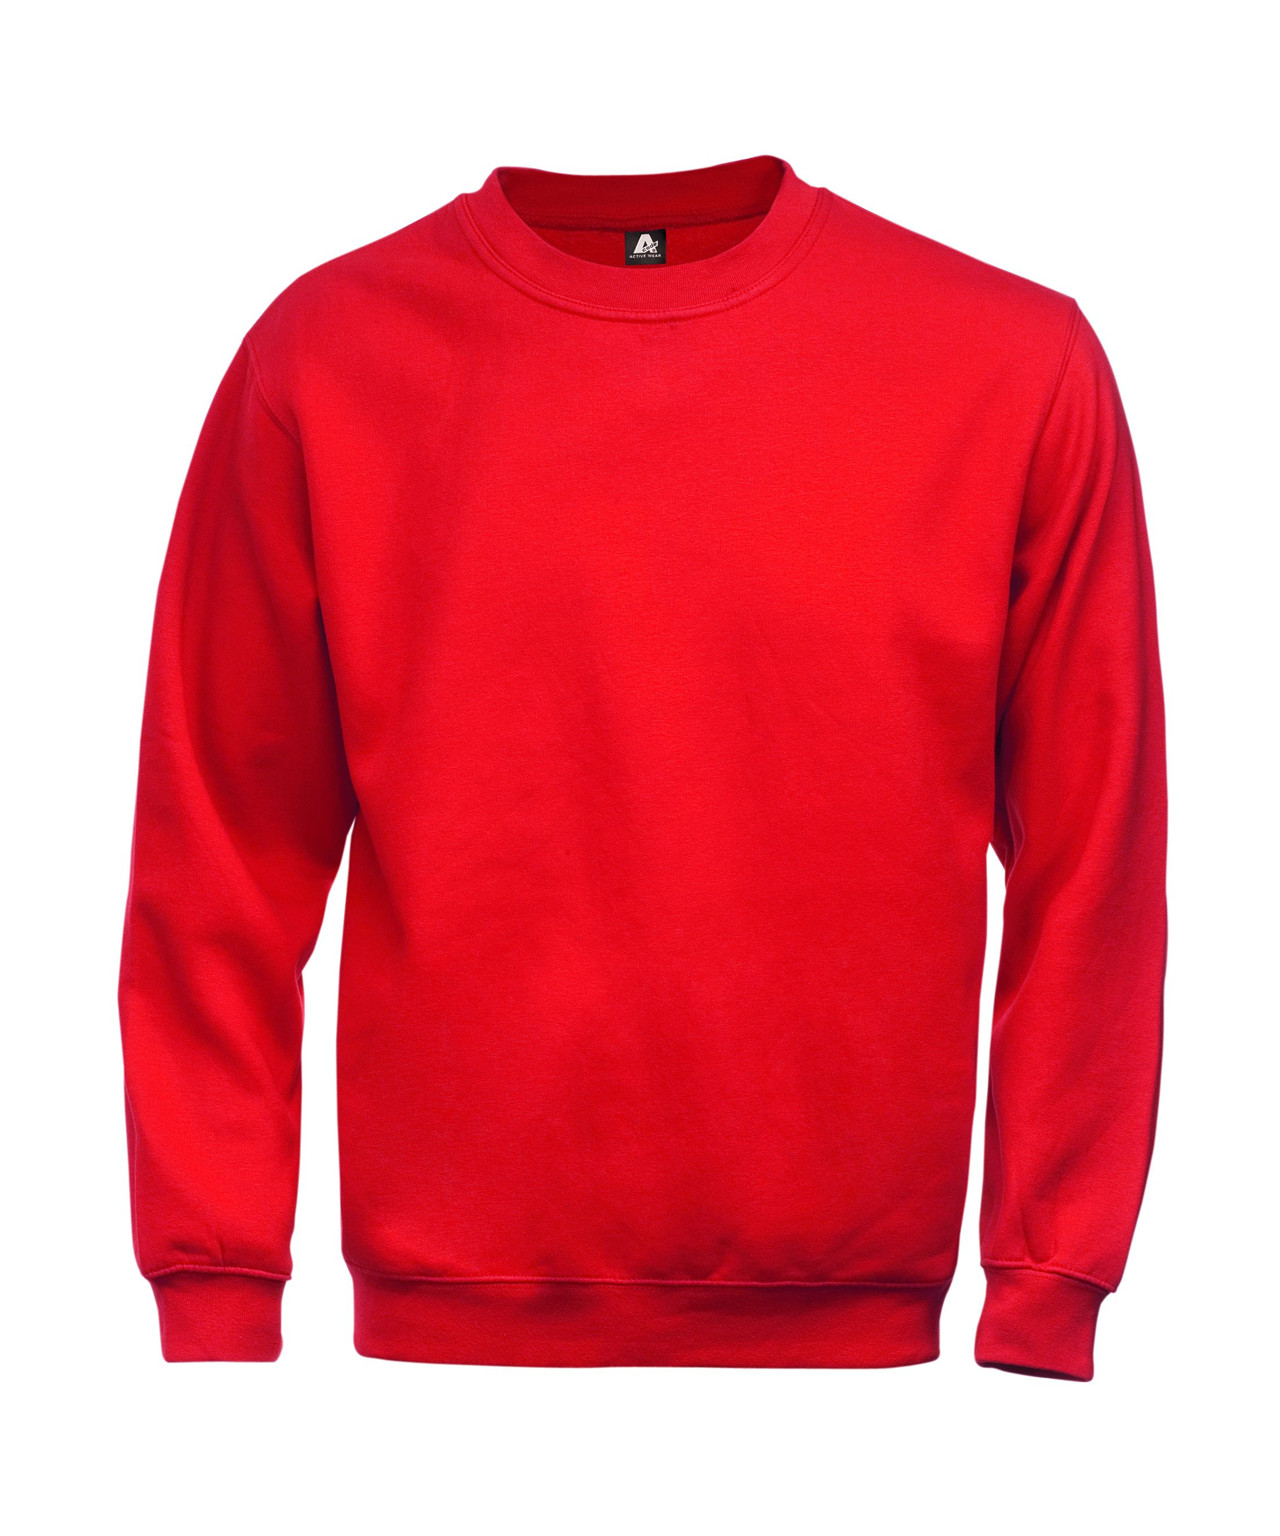 Se Kansas/Fristads A-Code klassisk sweatshirt (Rød, 2XL) hos Specialbutikken